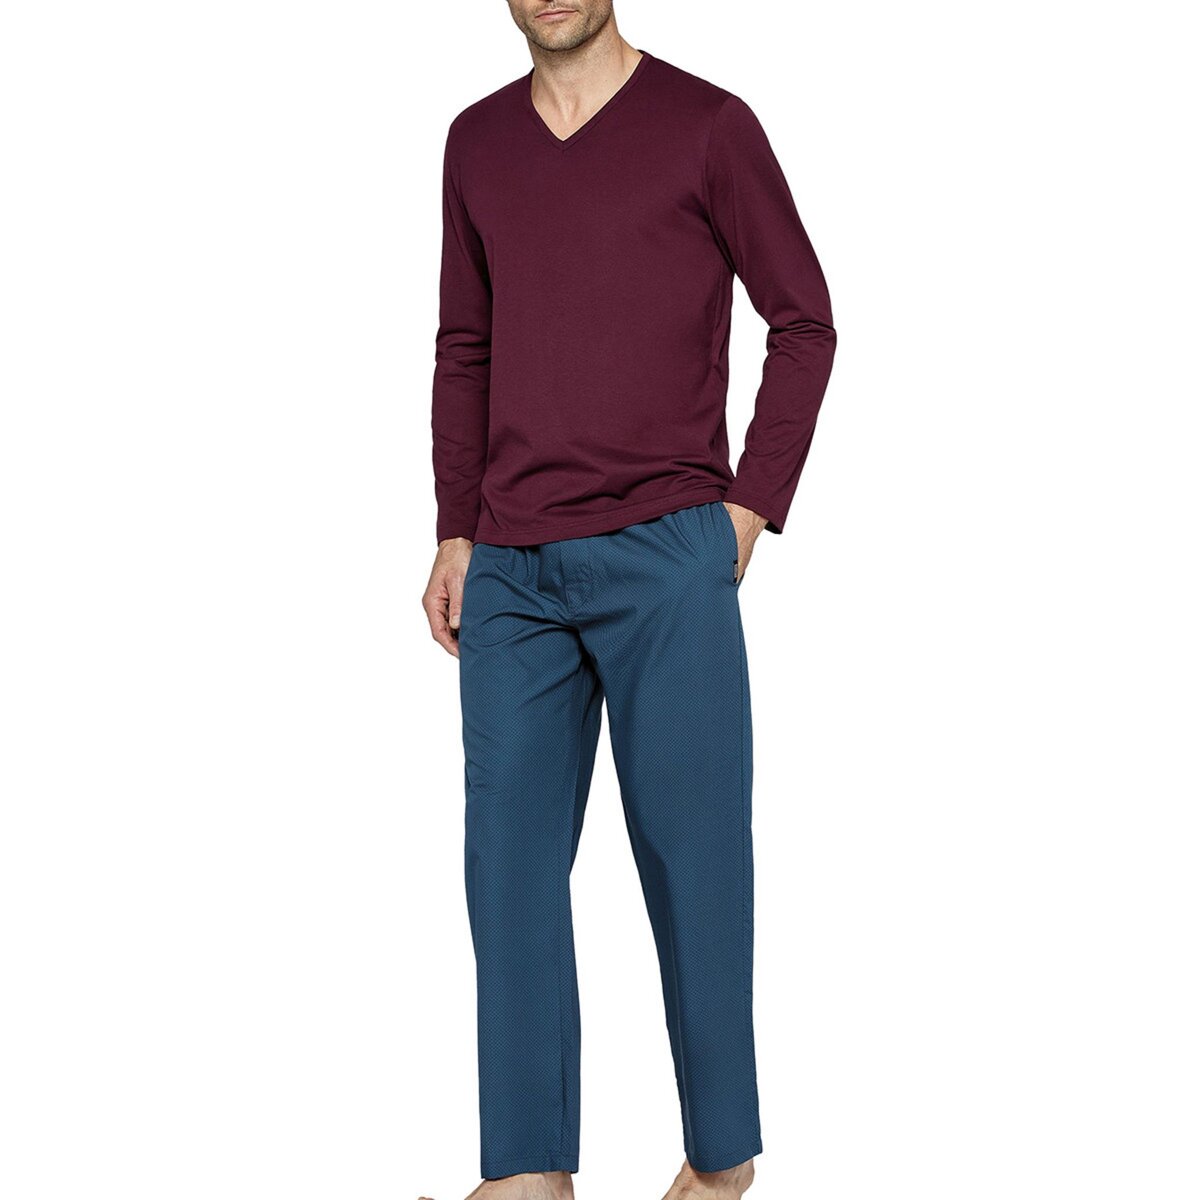  Pyjama masculin Garnet bordeaux